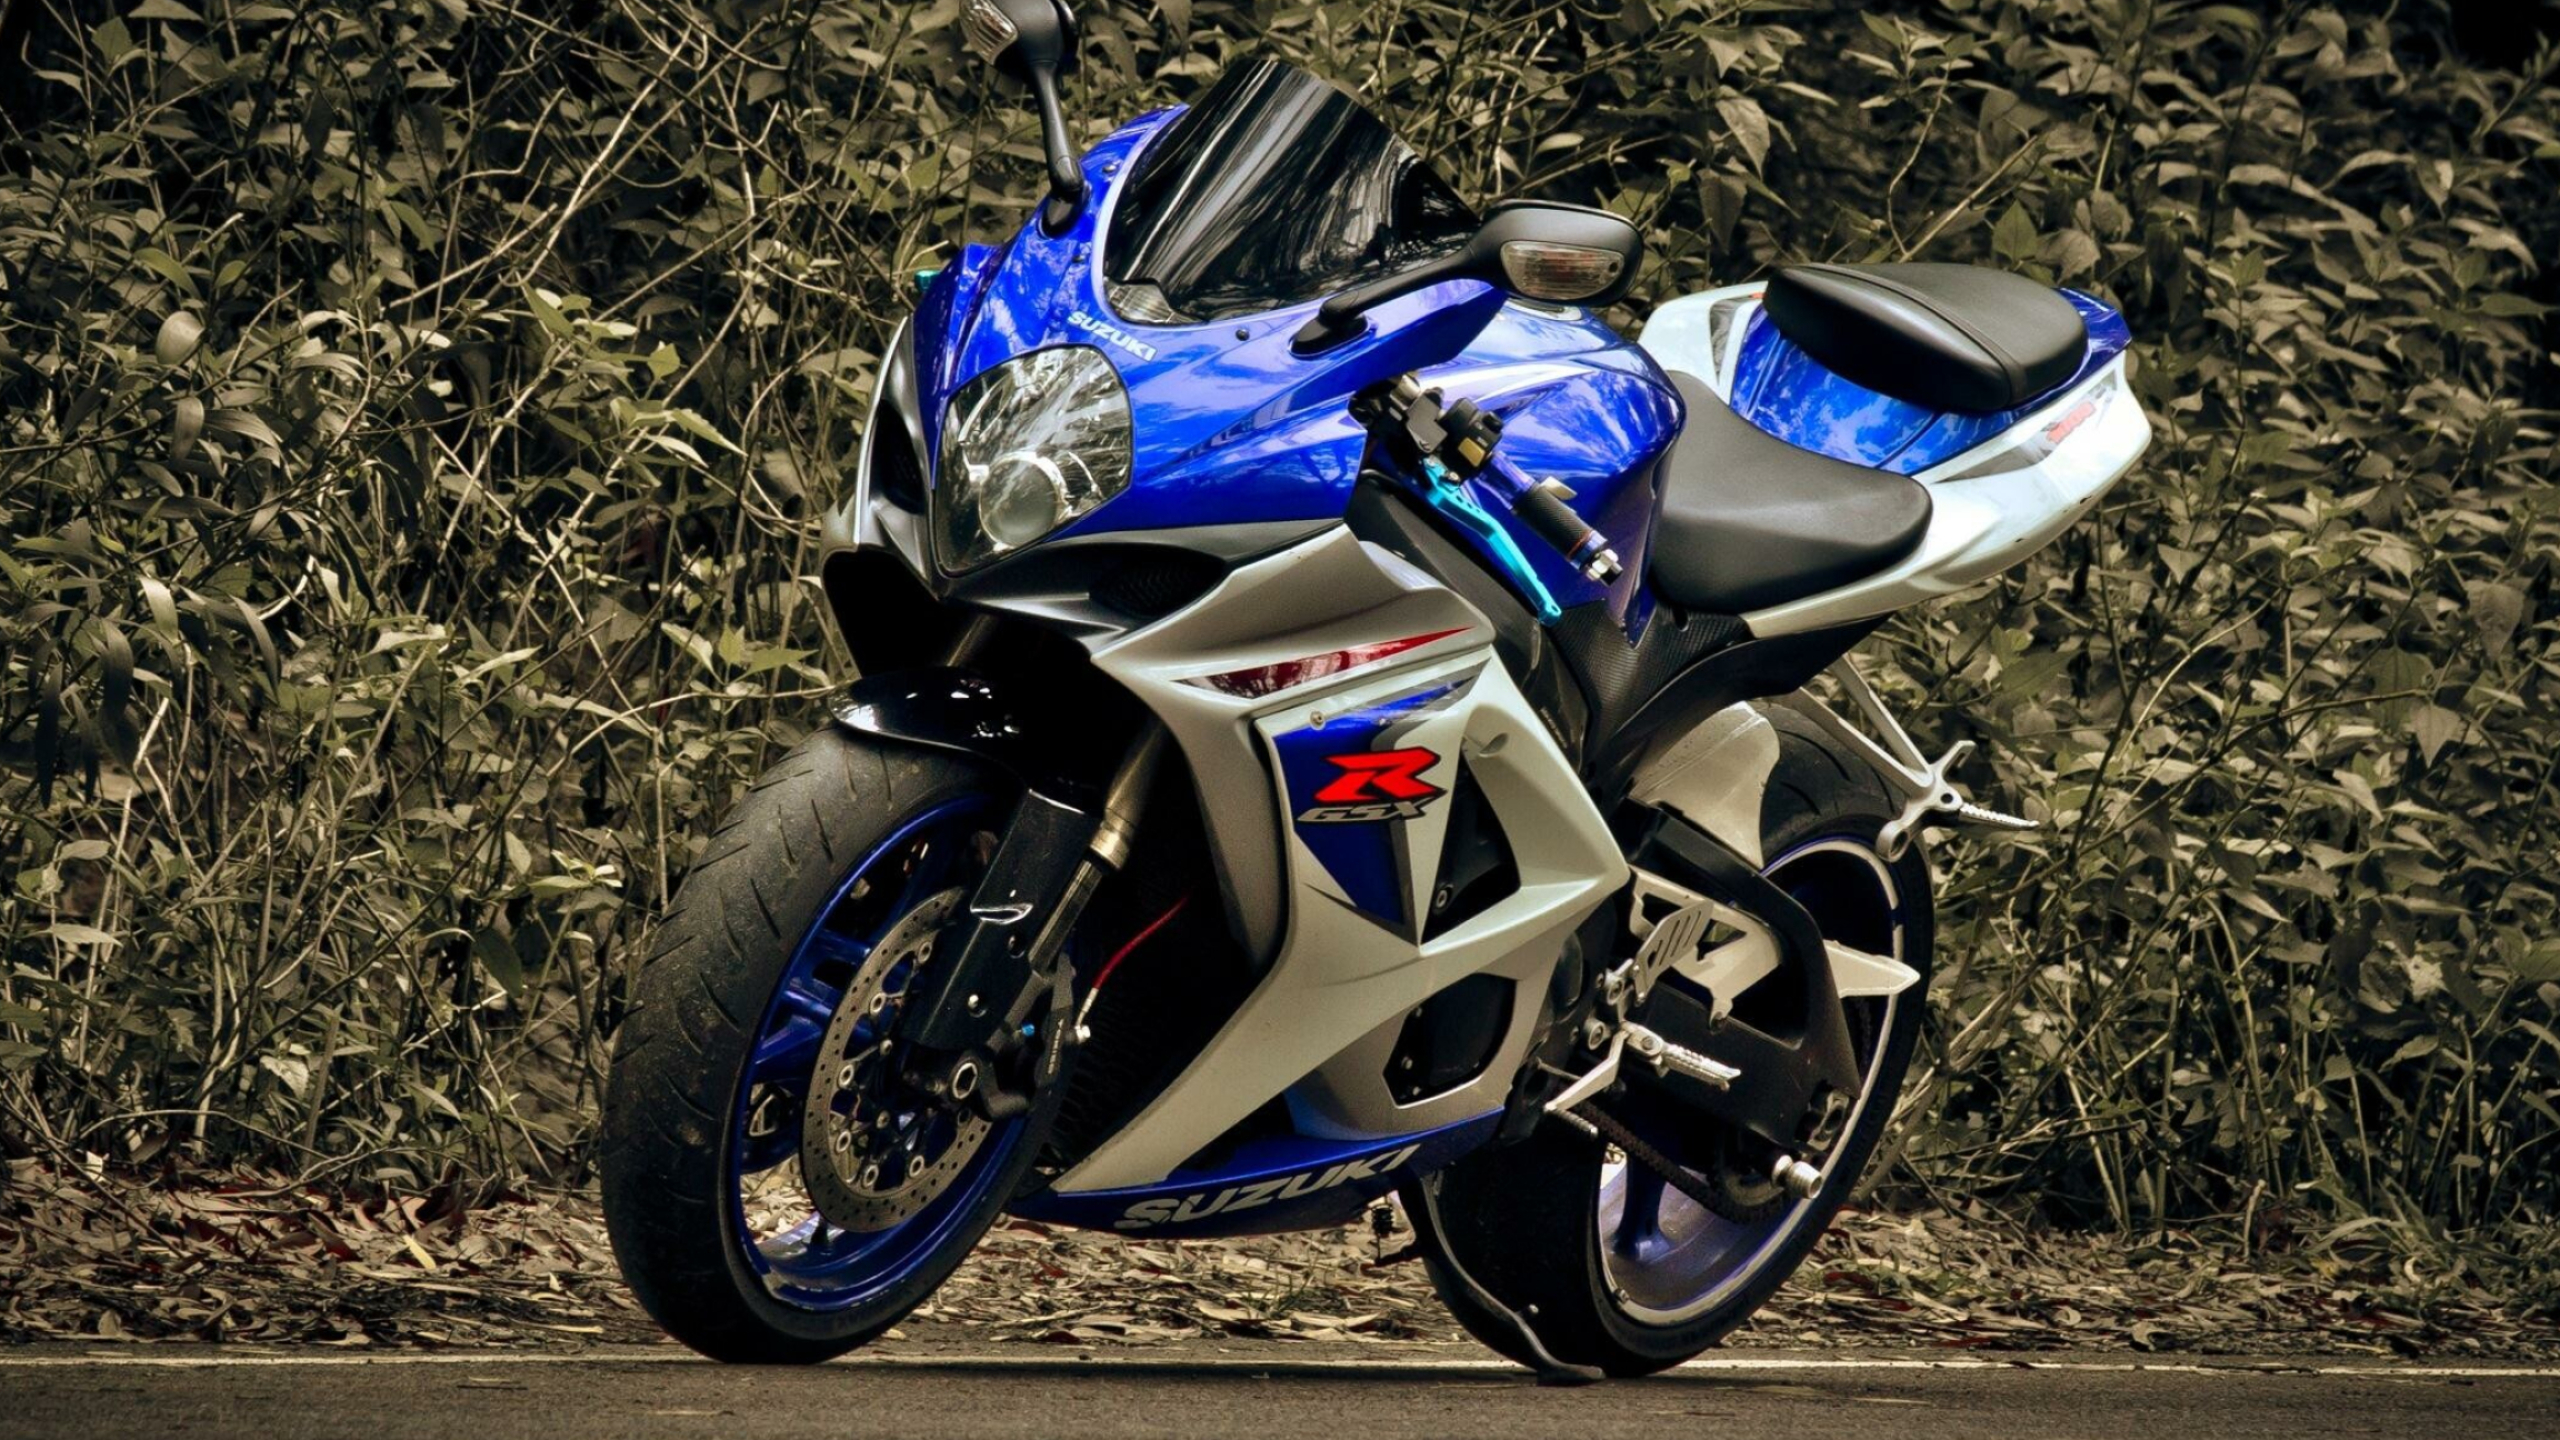 Gsxr wallpapers, Suzuki sport bikes, Extreme performance, Racing heritage, 2560x1440 HD Desktop